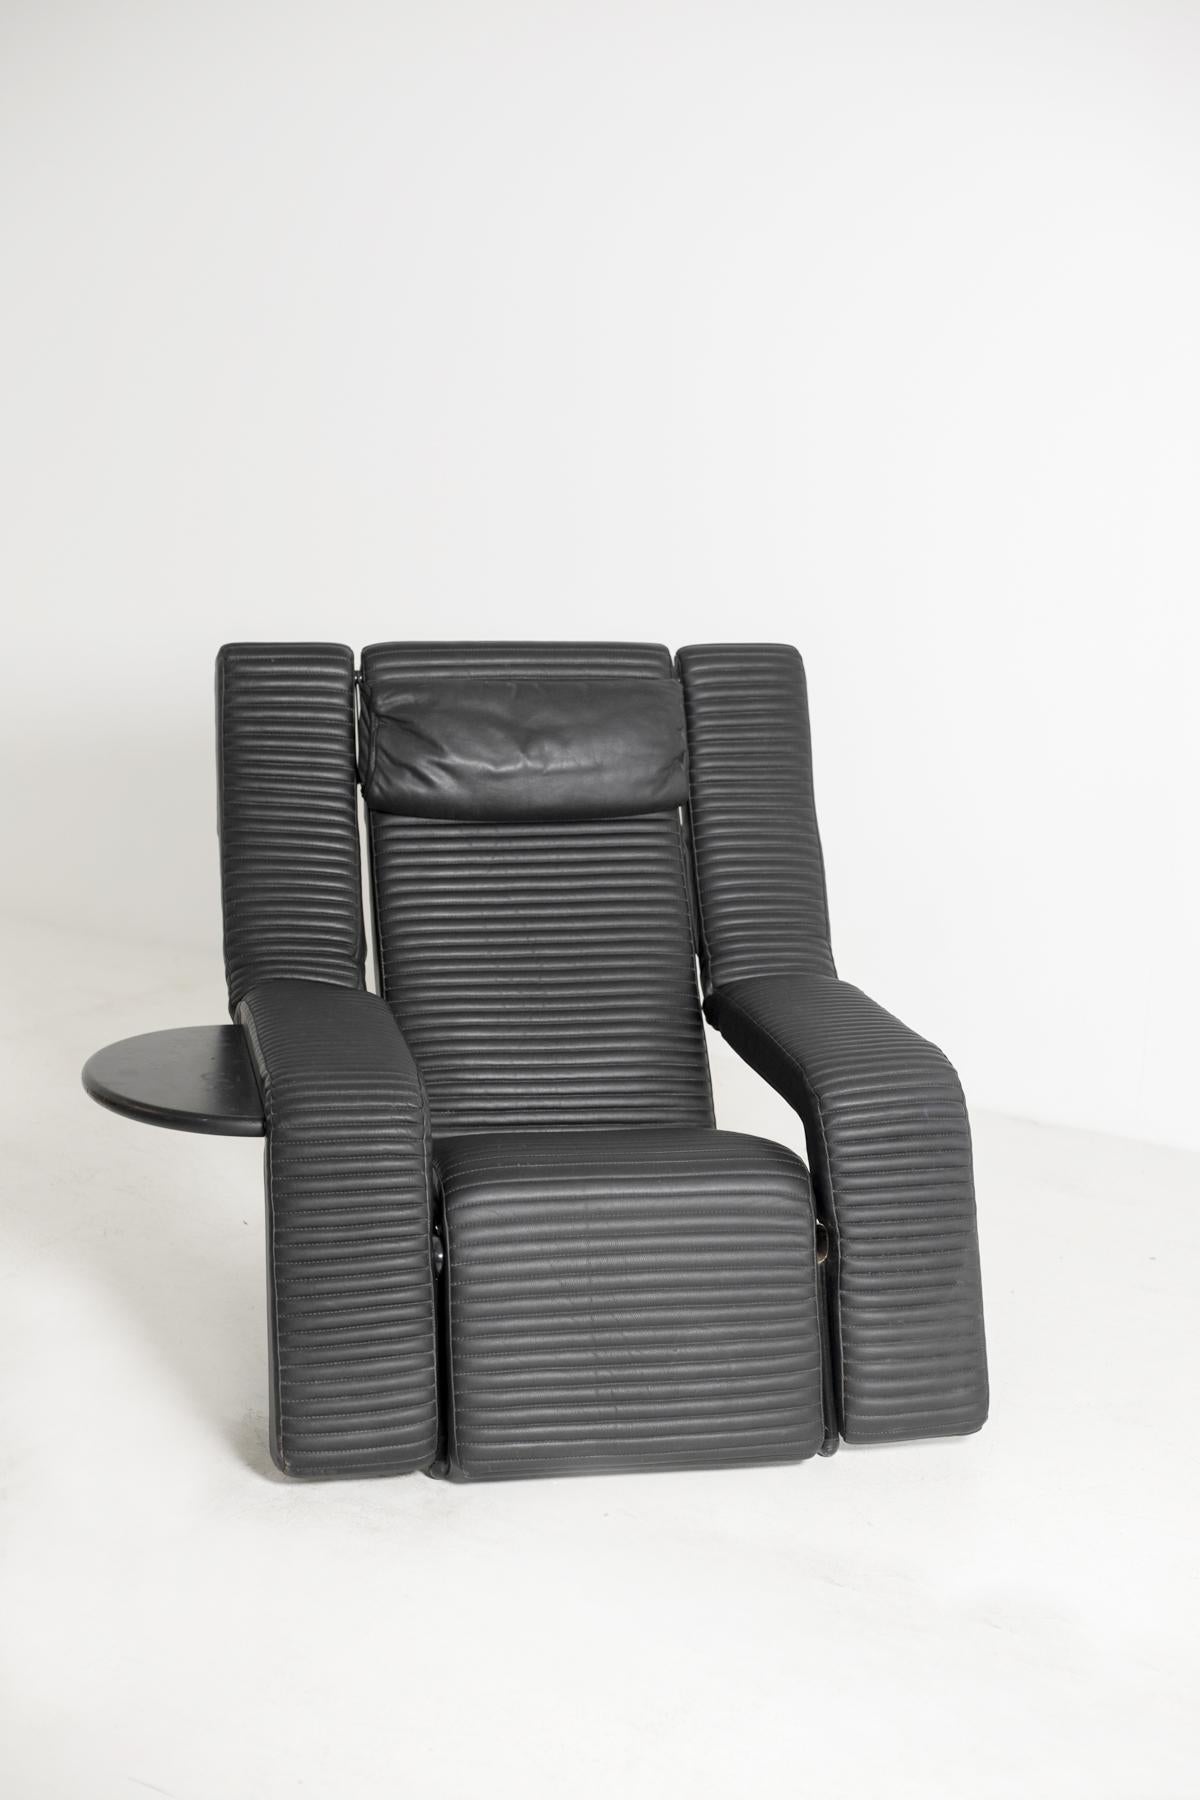 Late 20th Century Italian Black Lounge Chair Kilkis by Ammannati & Vitelli for Brunati, 1980s